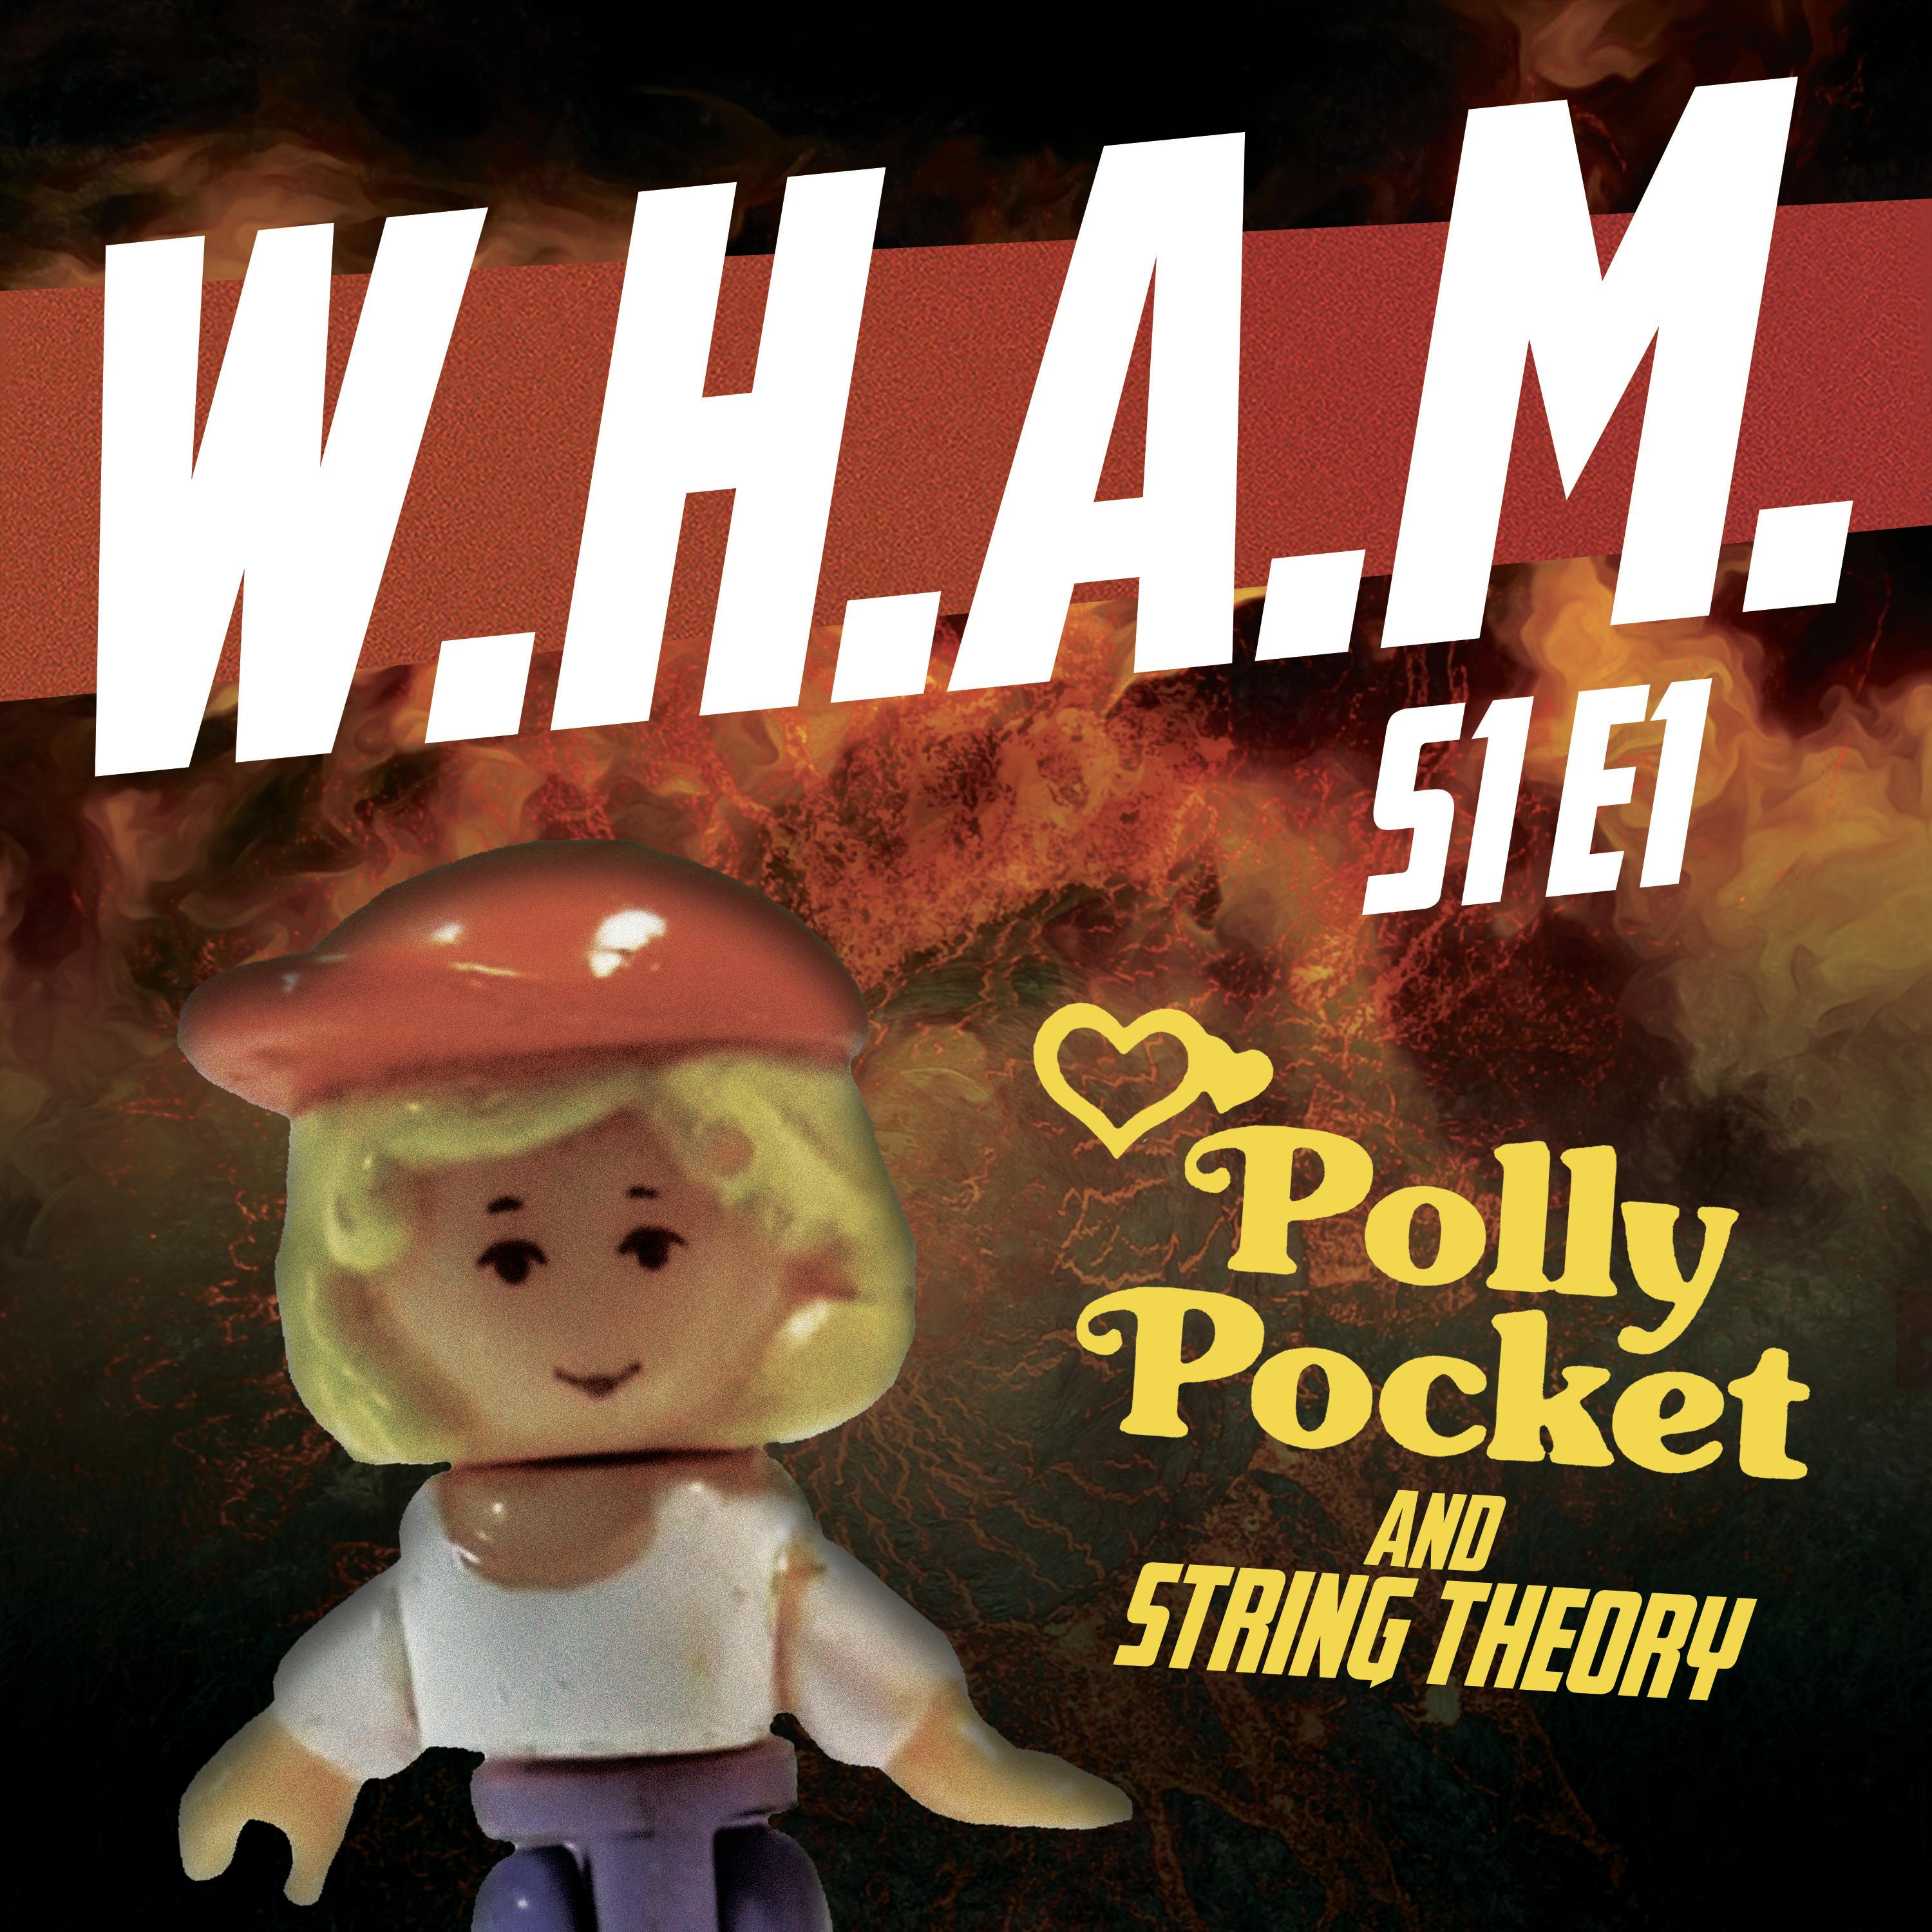 S1E1 - Polly Pocket and String Theory